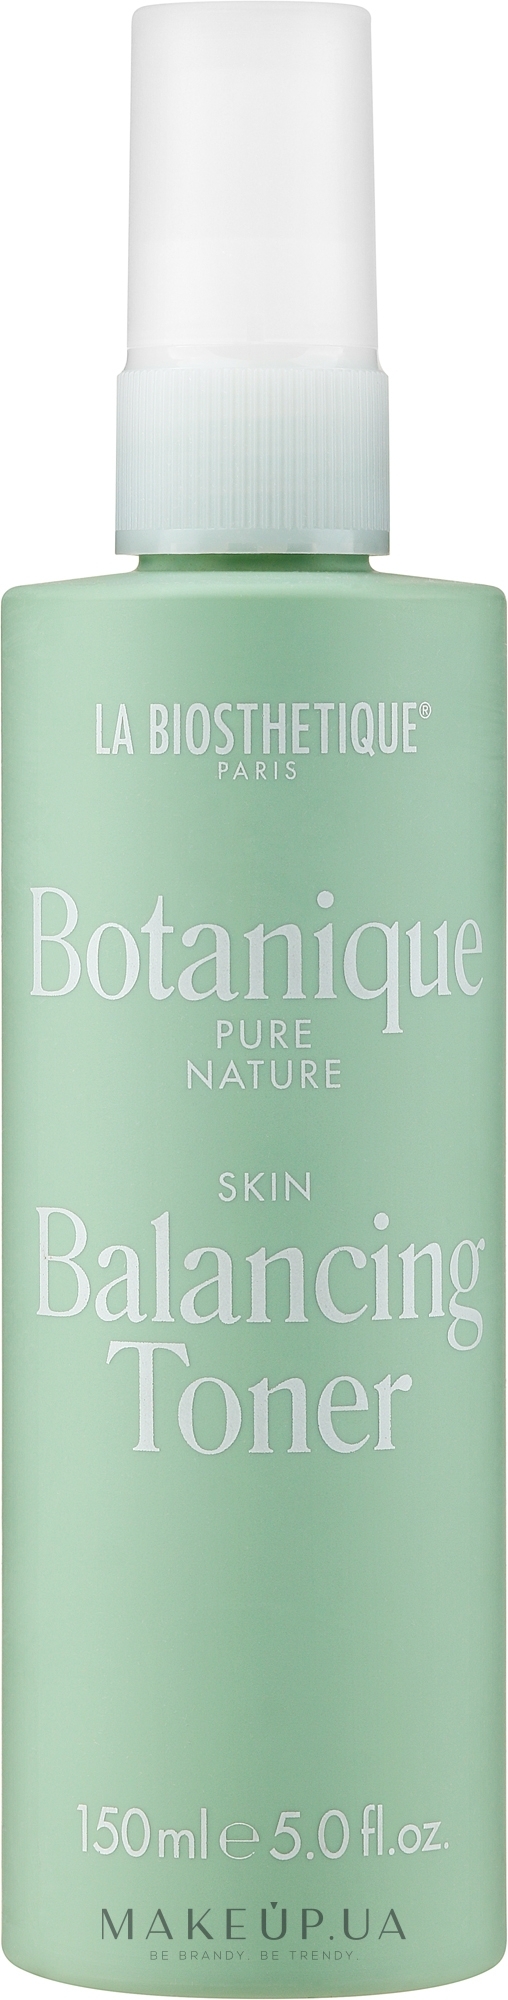 Тоник для для лица - La Biosthetique Botanique Pure Nature Balancing Toner — фото 150ml